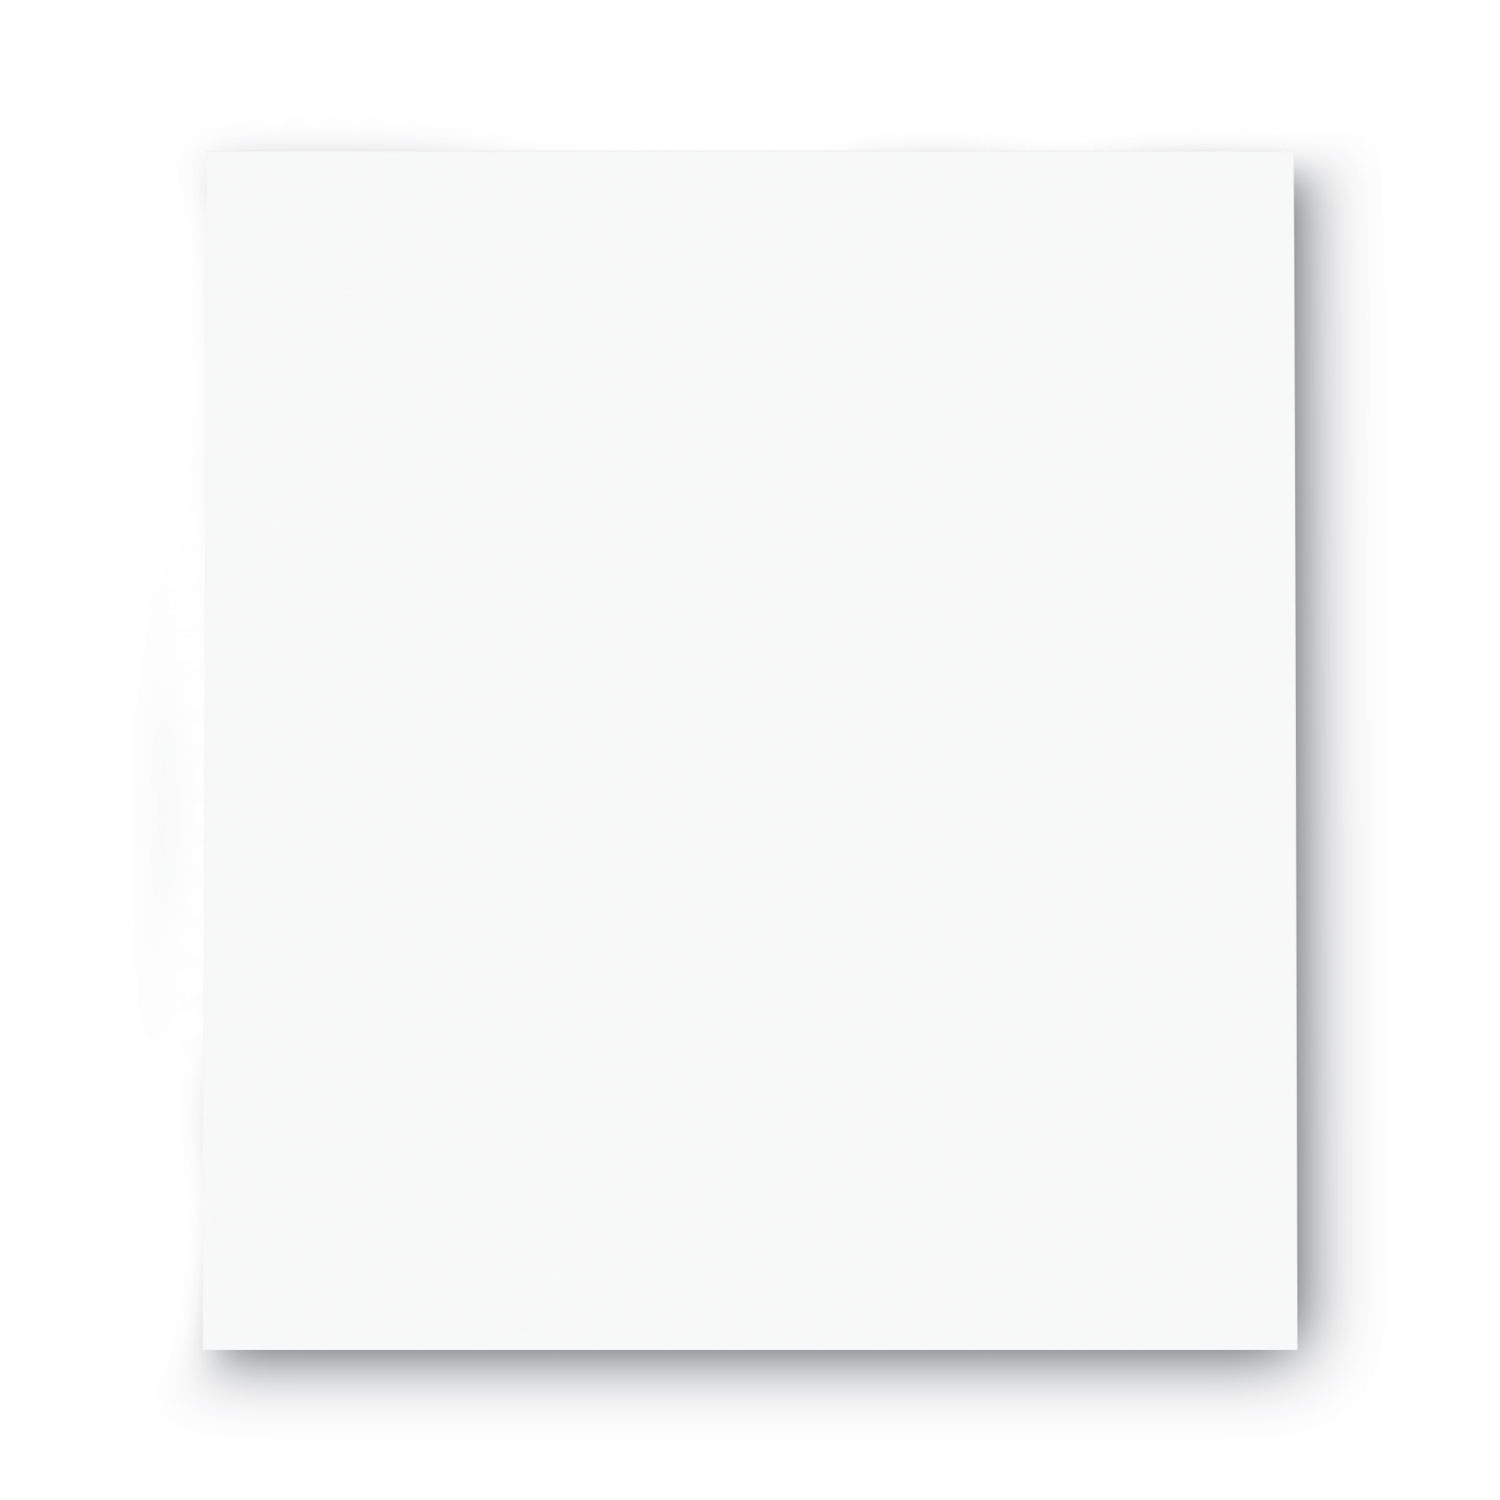 Universal Scratch Pads, Unruled, 3 x 5, White, 100 Sheets, 180/Carton